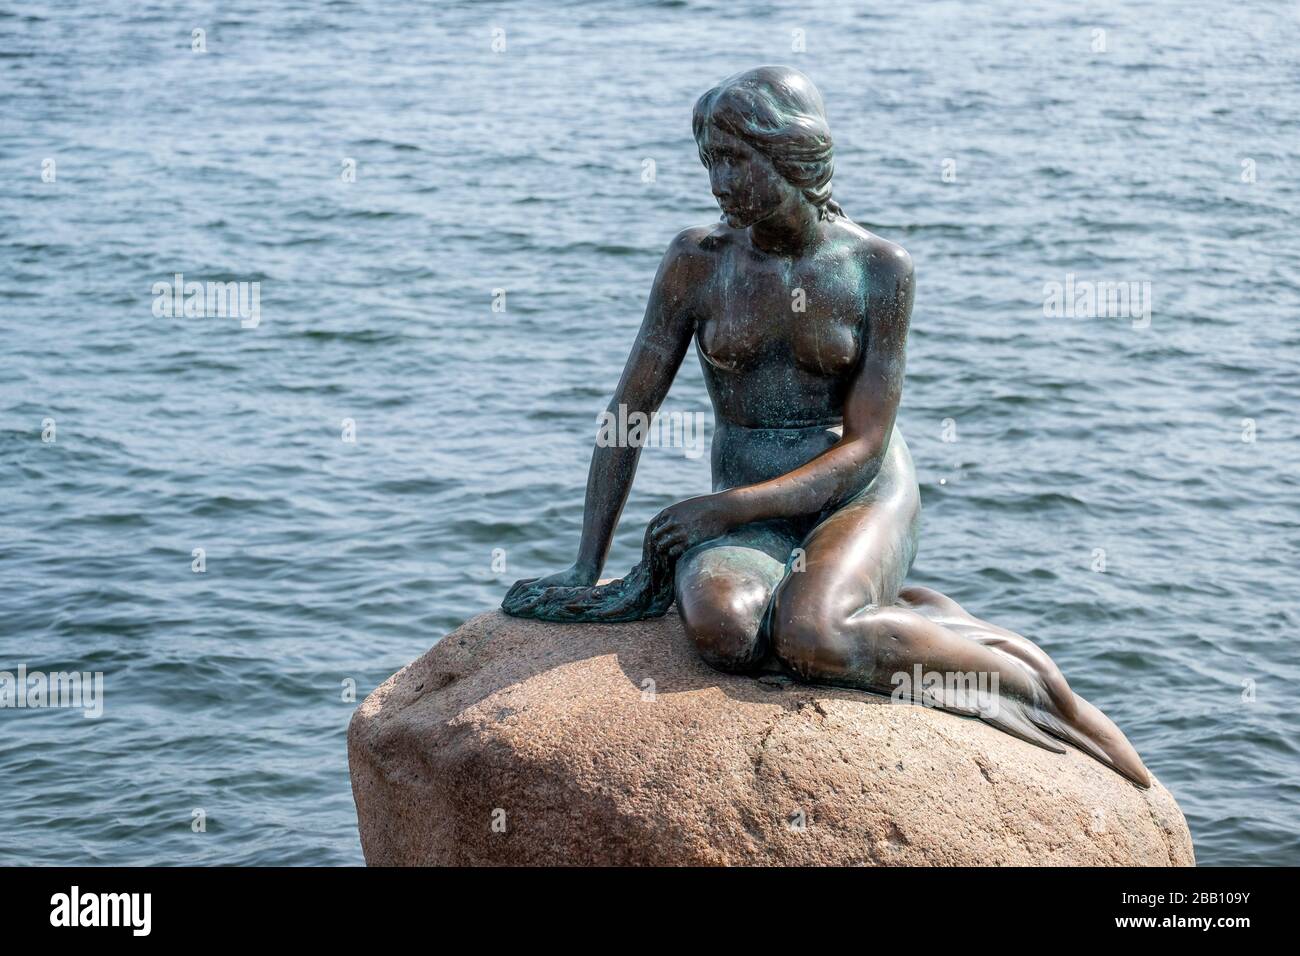 The Little Mermaid statue in Copenhagen, Denmark, Europe Stock Photo